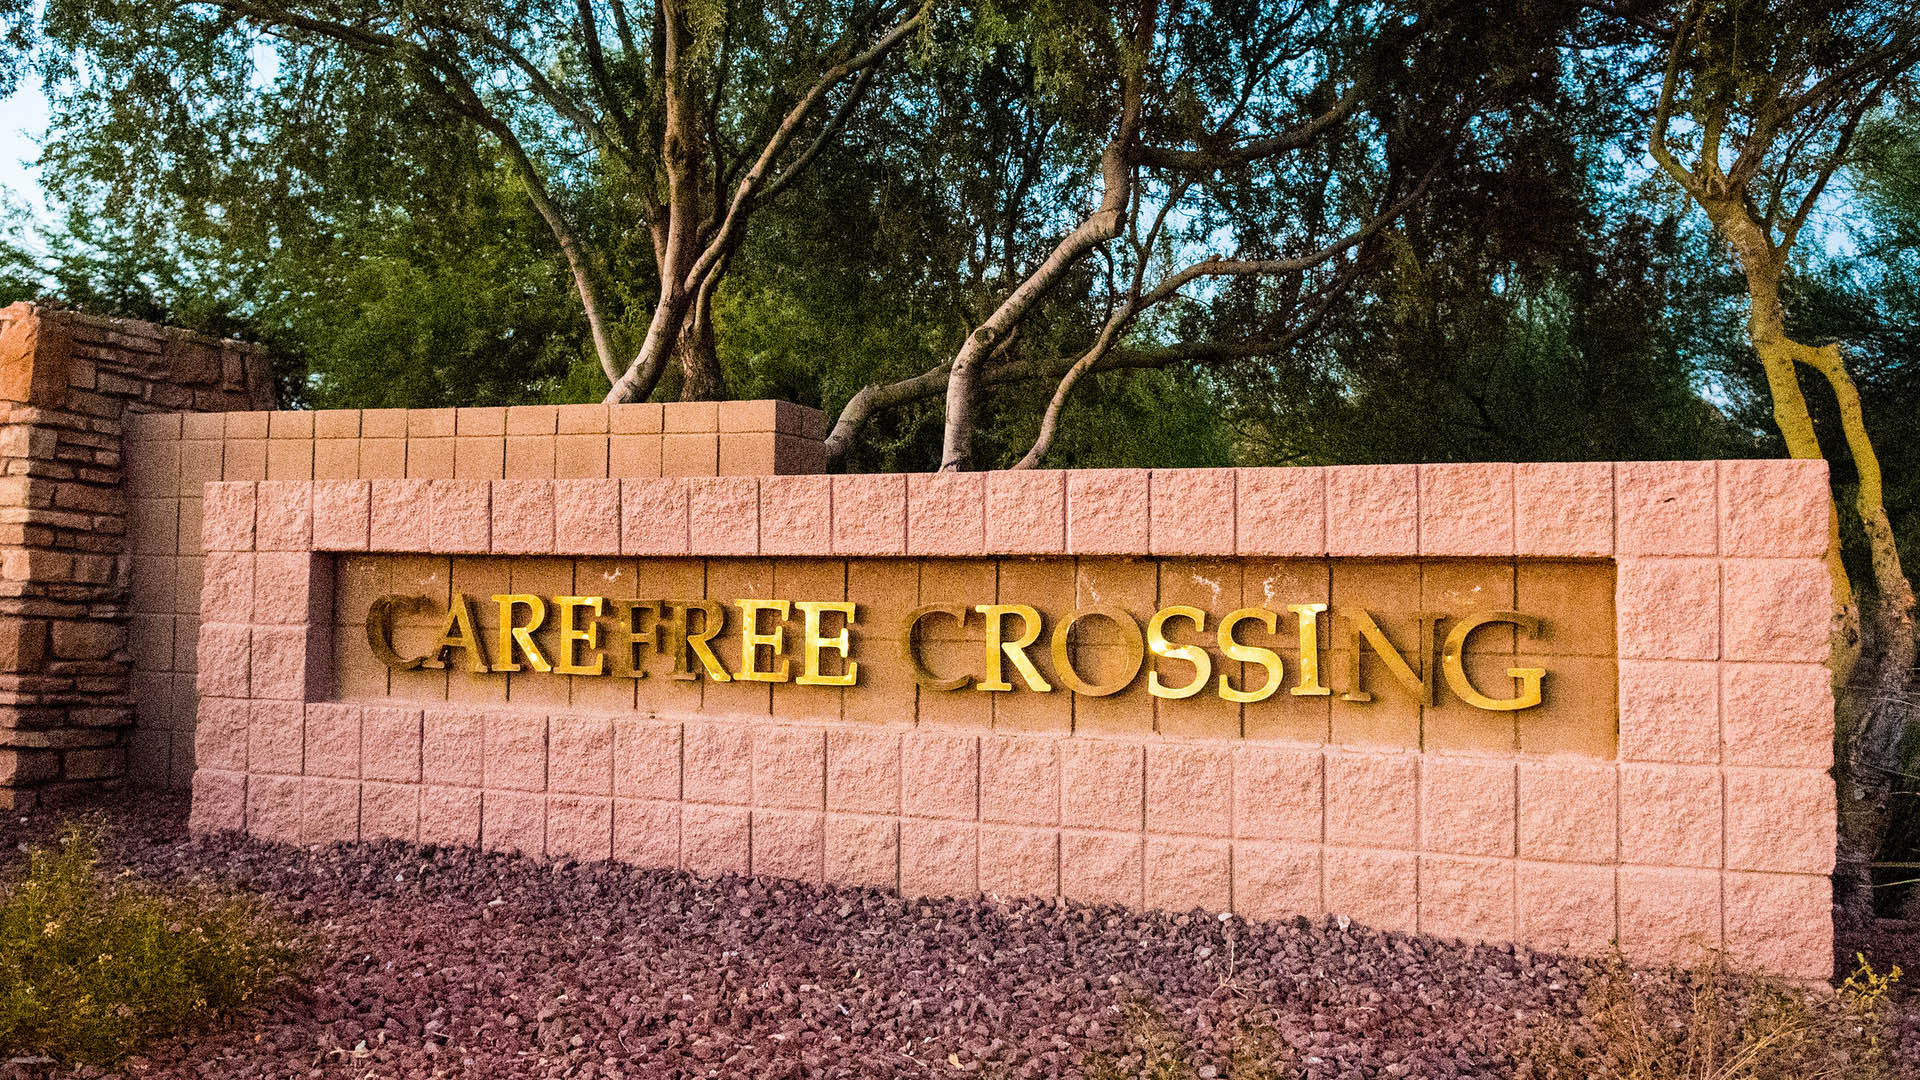 Carefree Crossing homes in norterra 85085